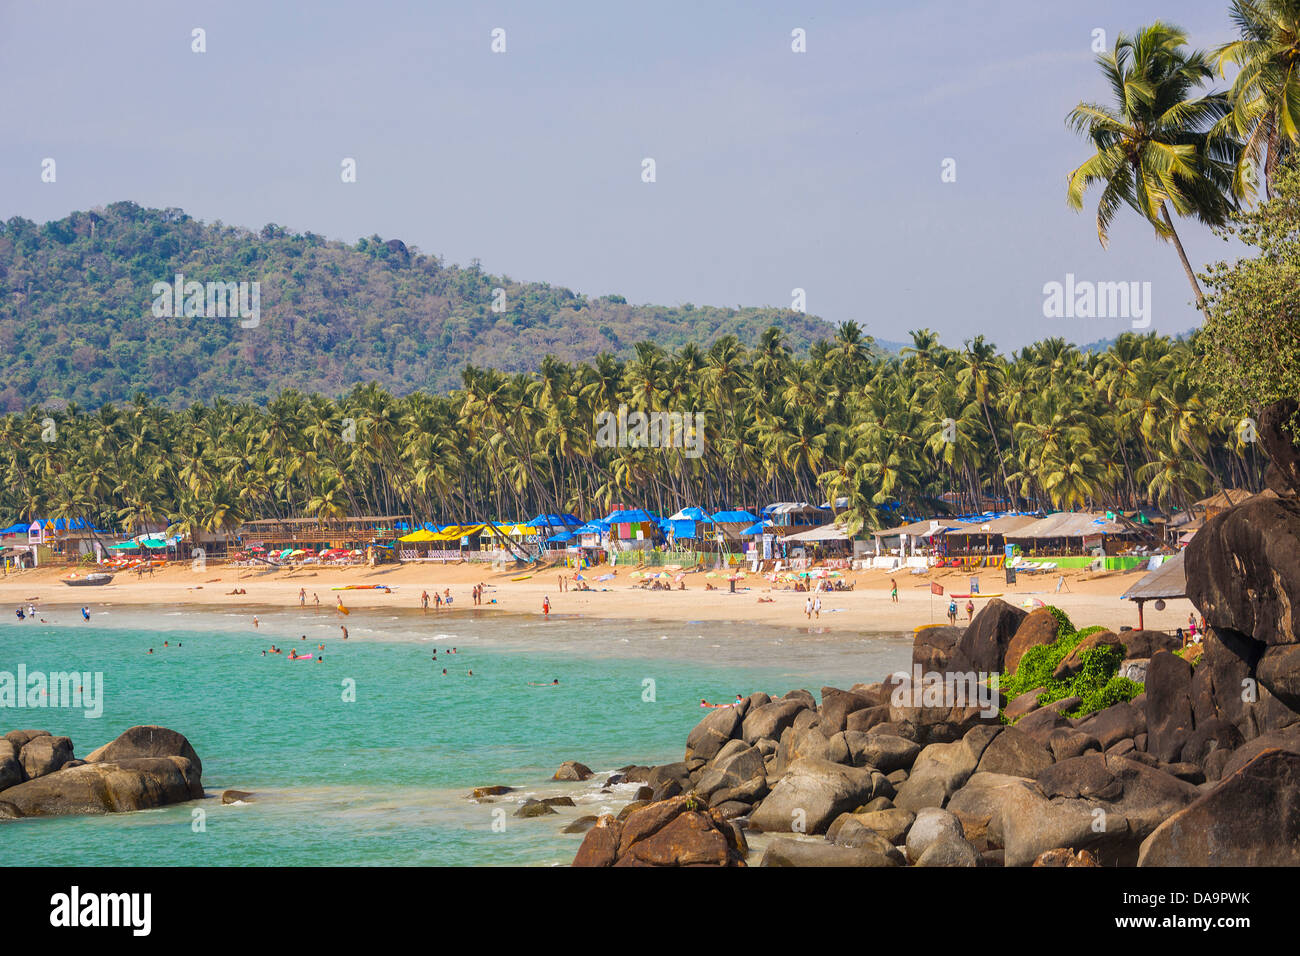 India, South India, Asia, Goa, Palolem Beach, Palolem, beach, beautiful, boats, bungalows, colour, colourful, palm trees, touris Stock Photo